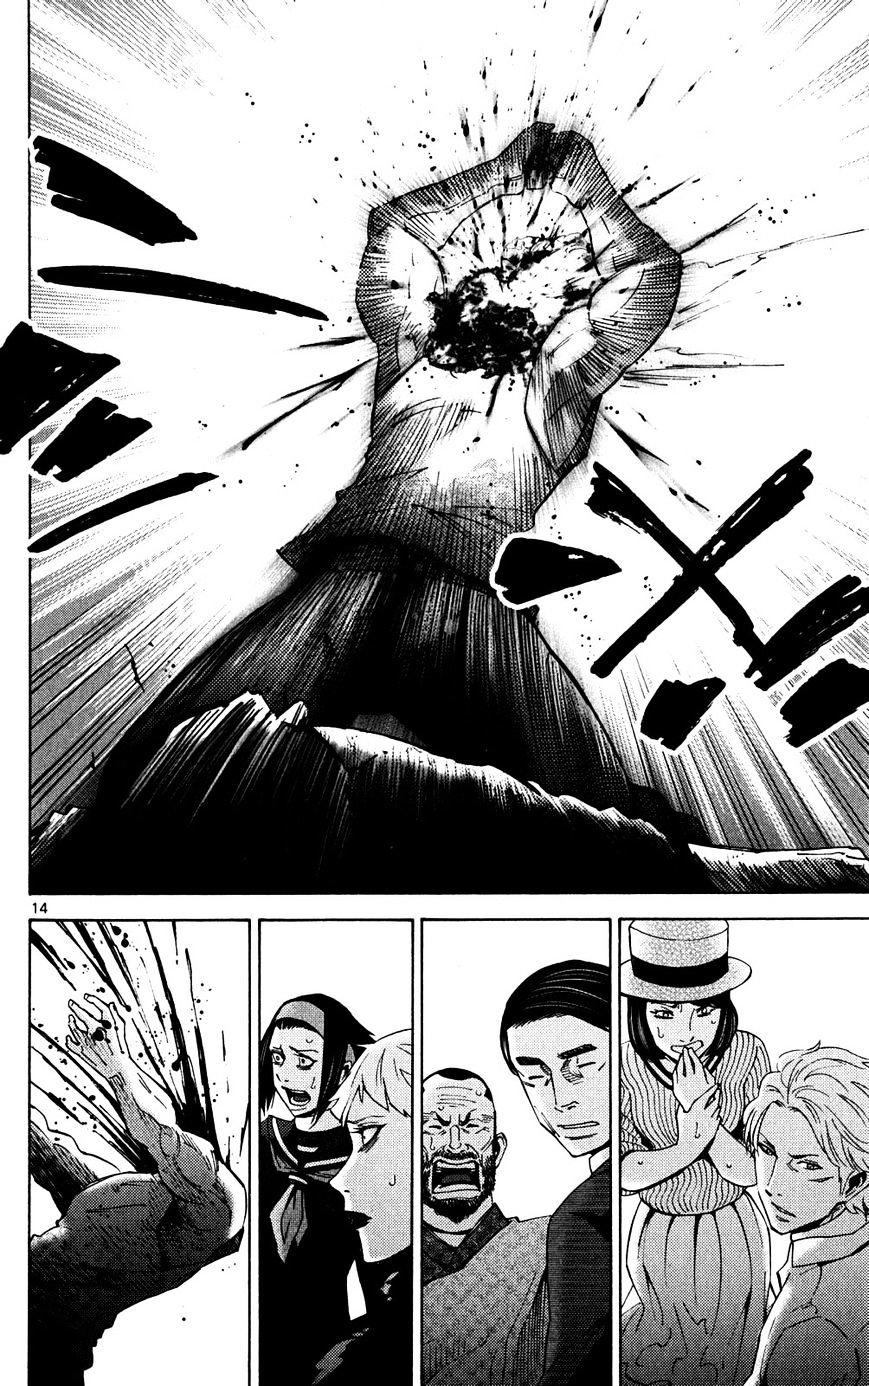 Imawa No Kuni No Alice Chapter 46 : Jack Of Hearts (2) page 14 - Mangakakalot